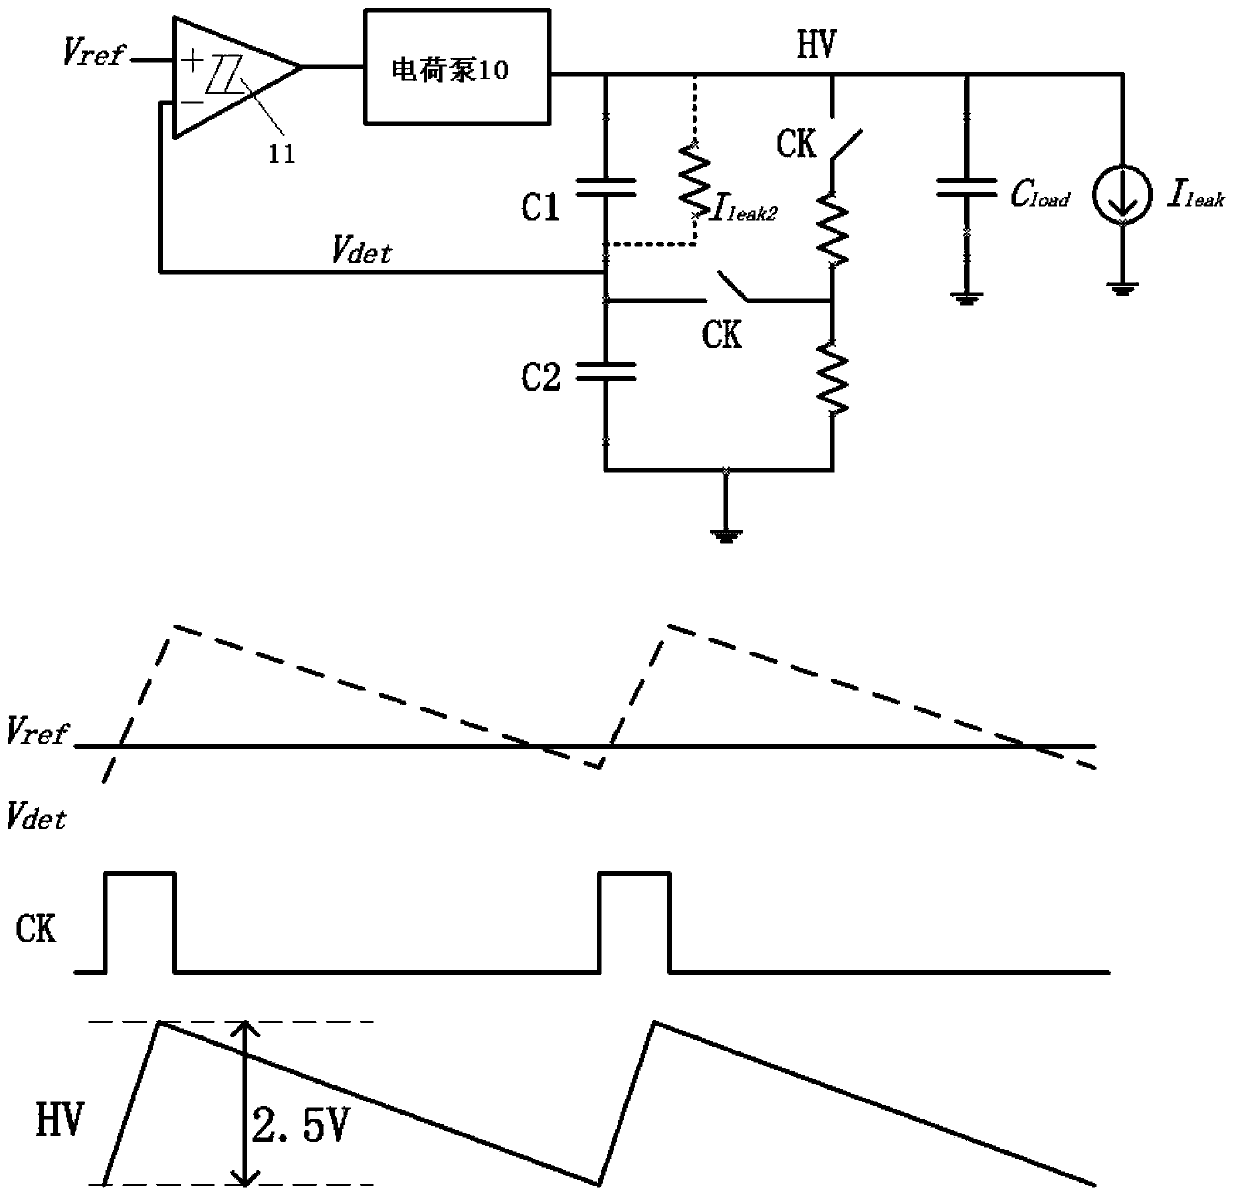 Low power consumption voltage regulator circuit